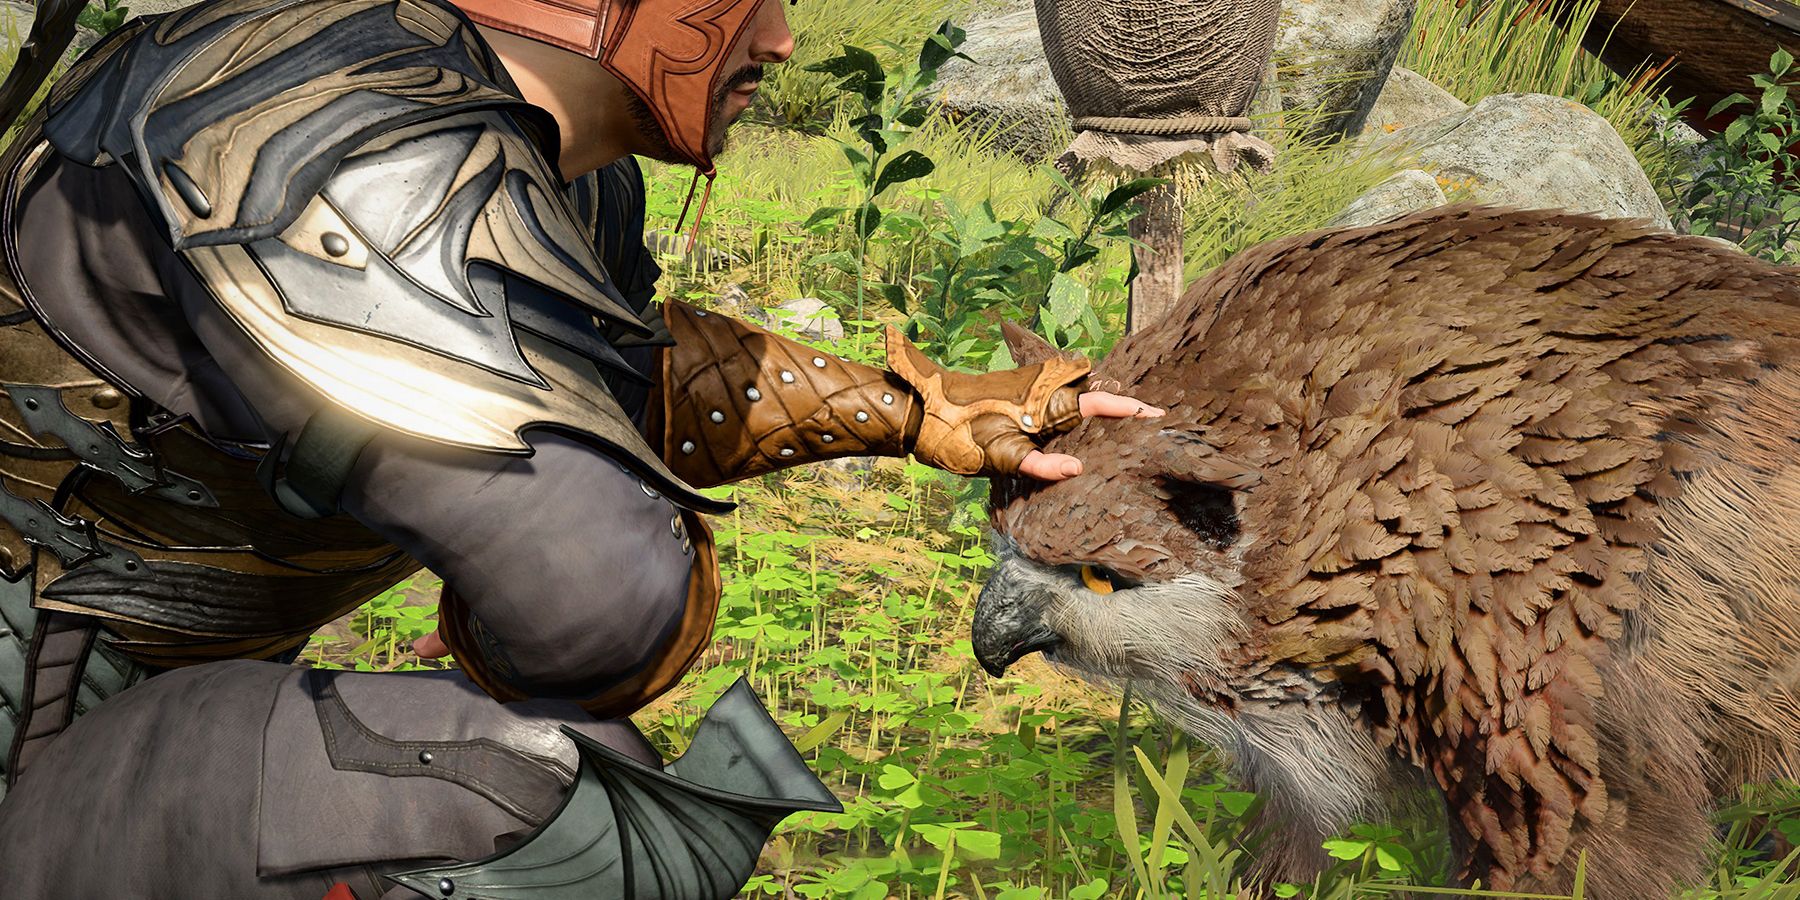 Baldur's Gate 3 Tav petting owlbear cub in Act 1 screenshot